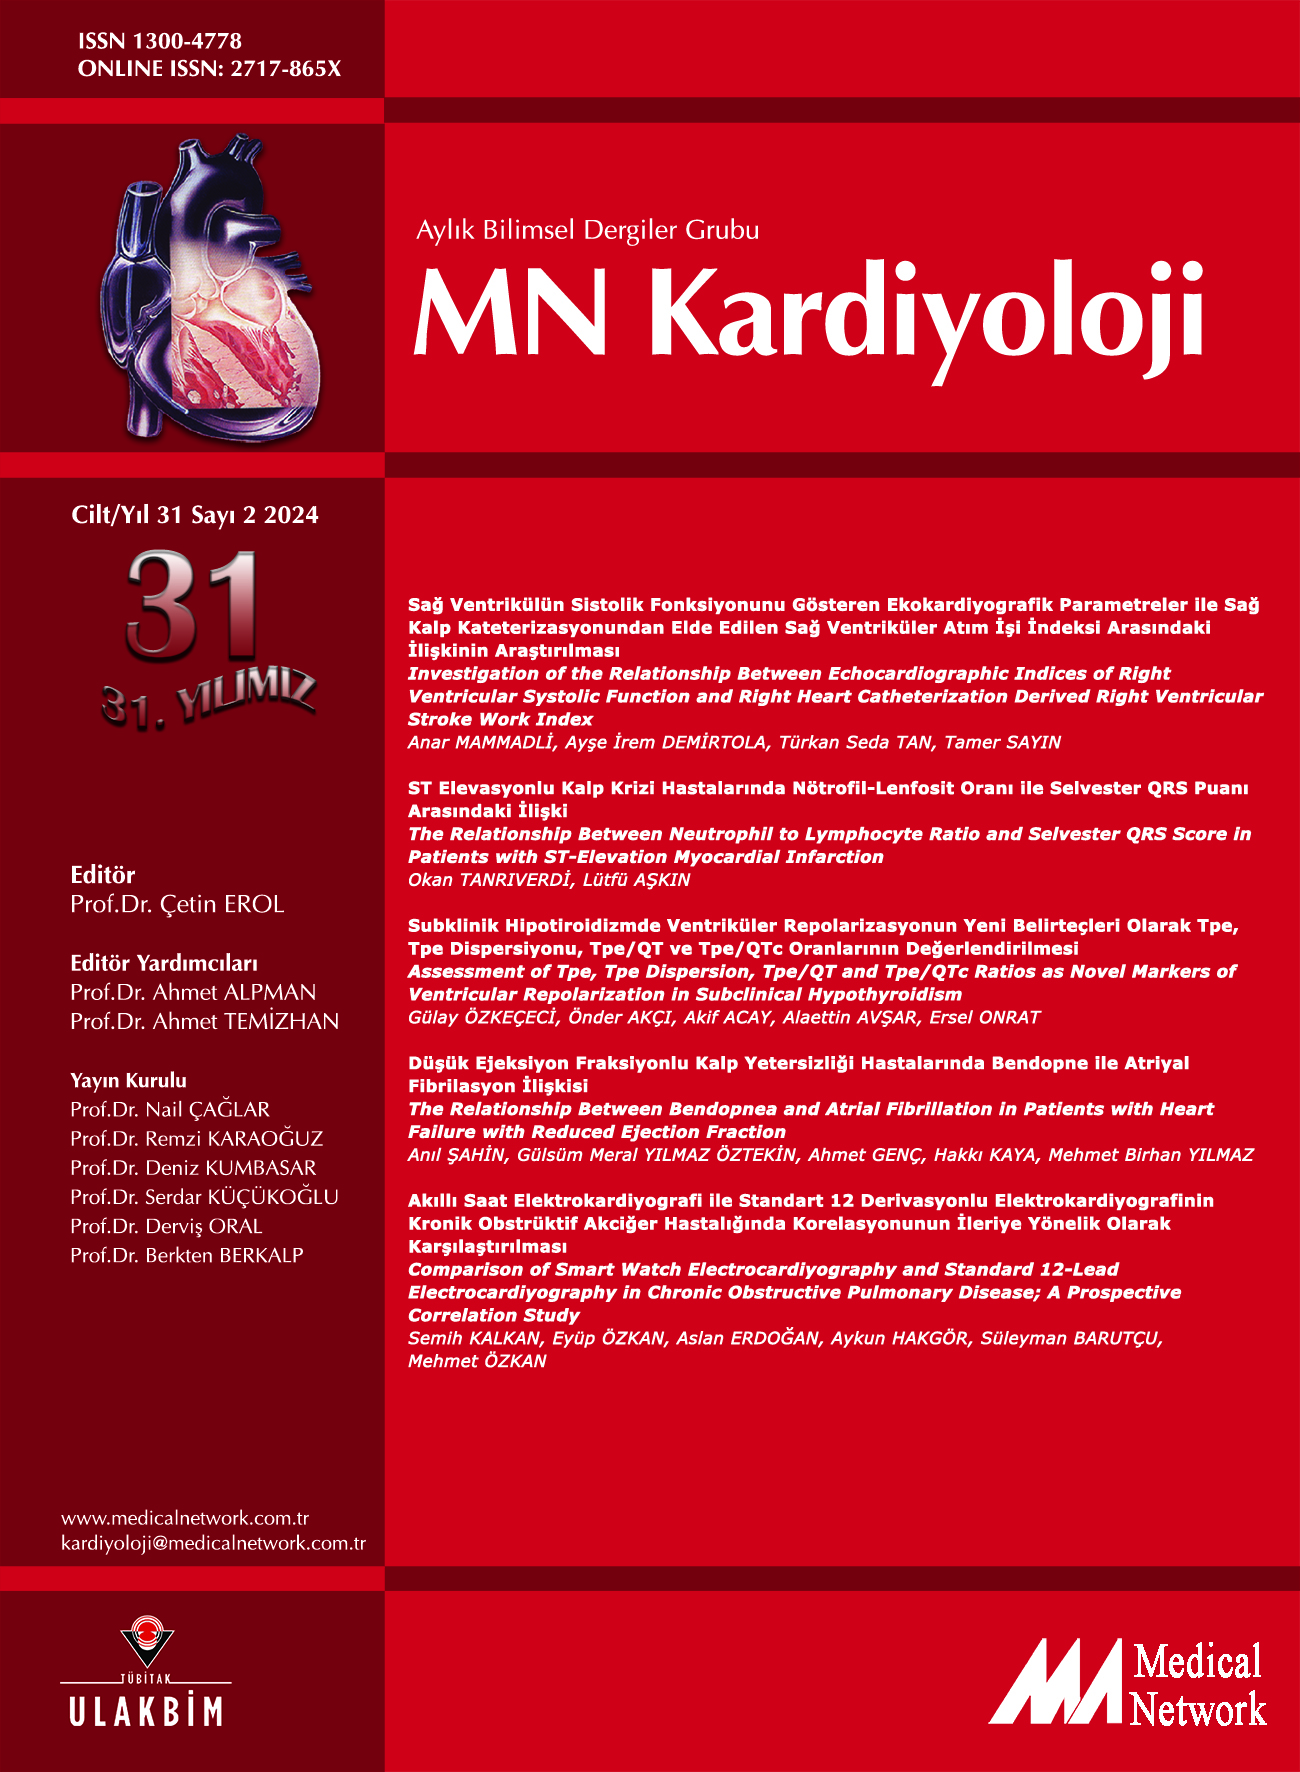 <p>MN Kardiyoloji Cilt: 31 Say: 2 2024 MN Cardiology Volume: 31 No: 2 2024</p>